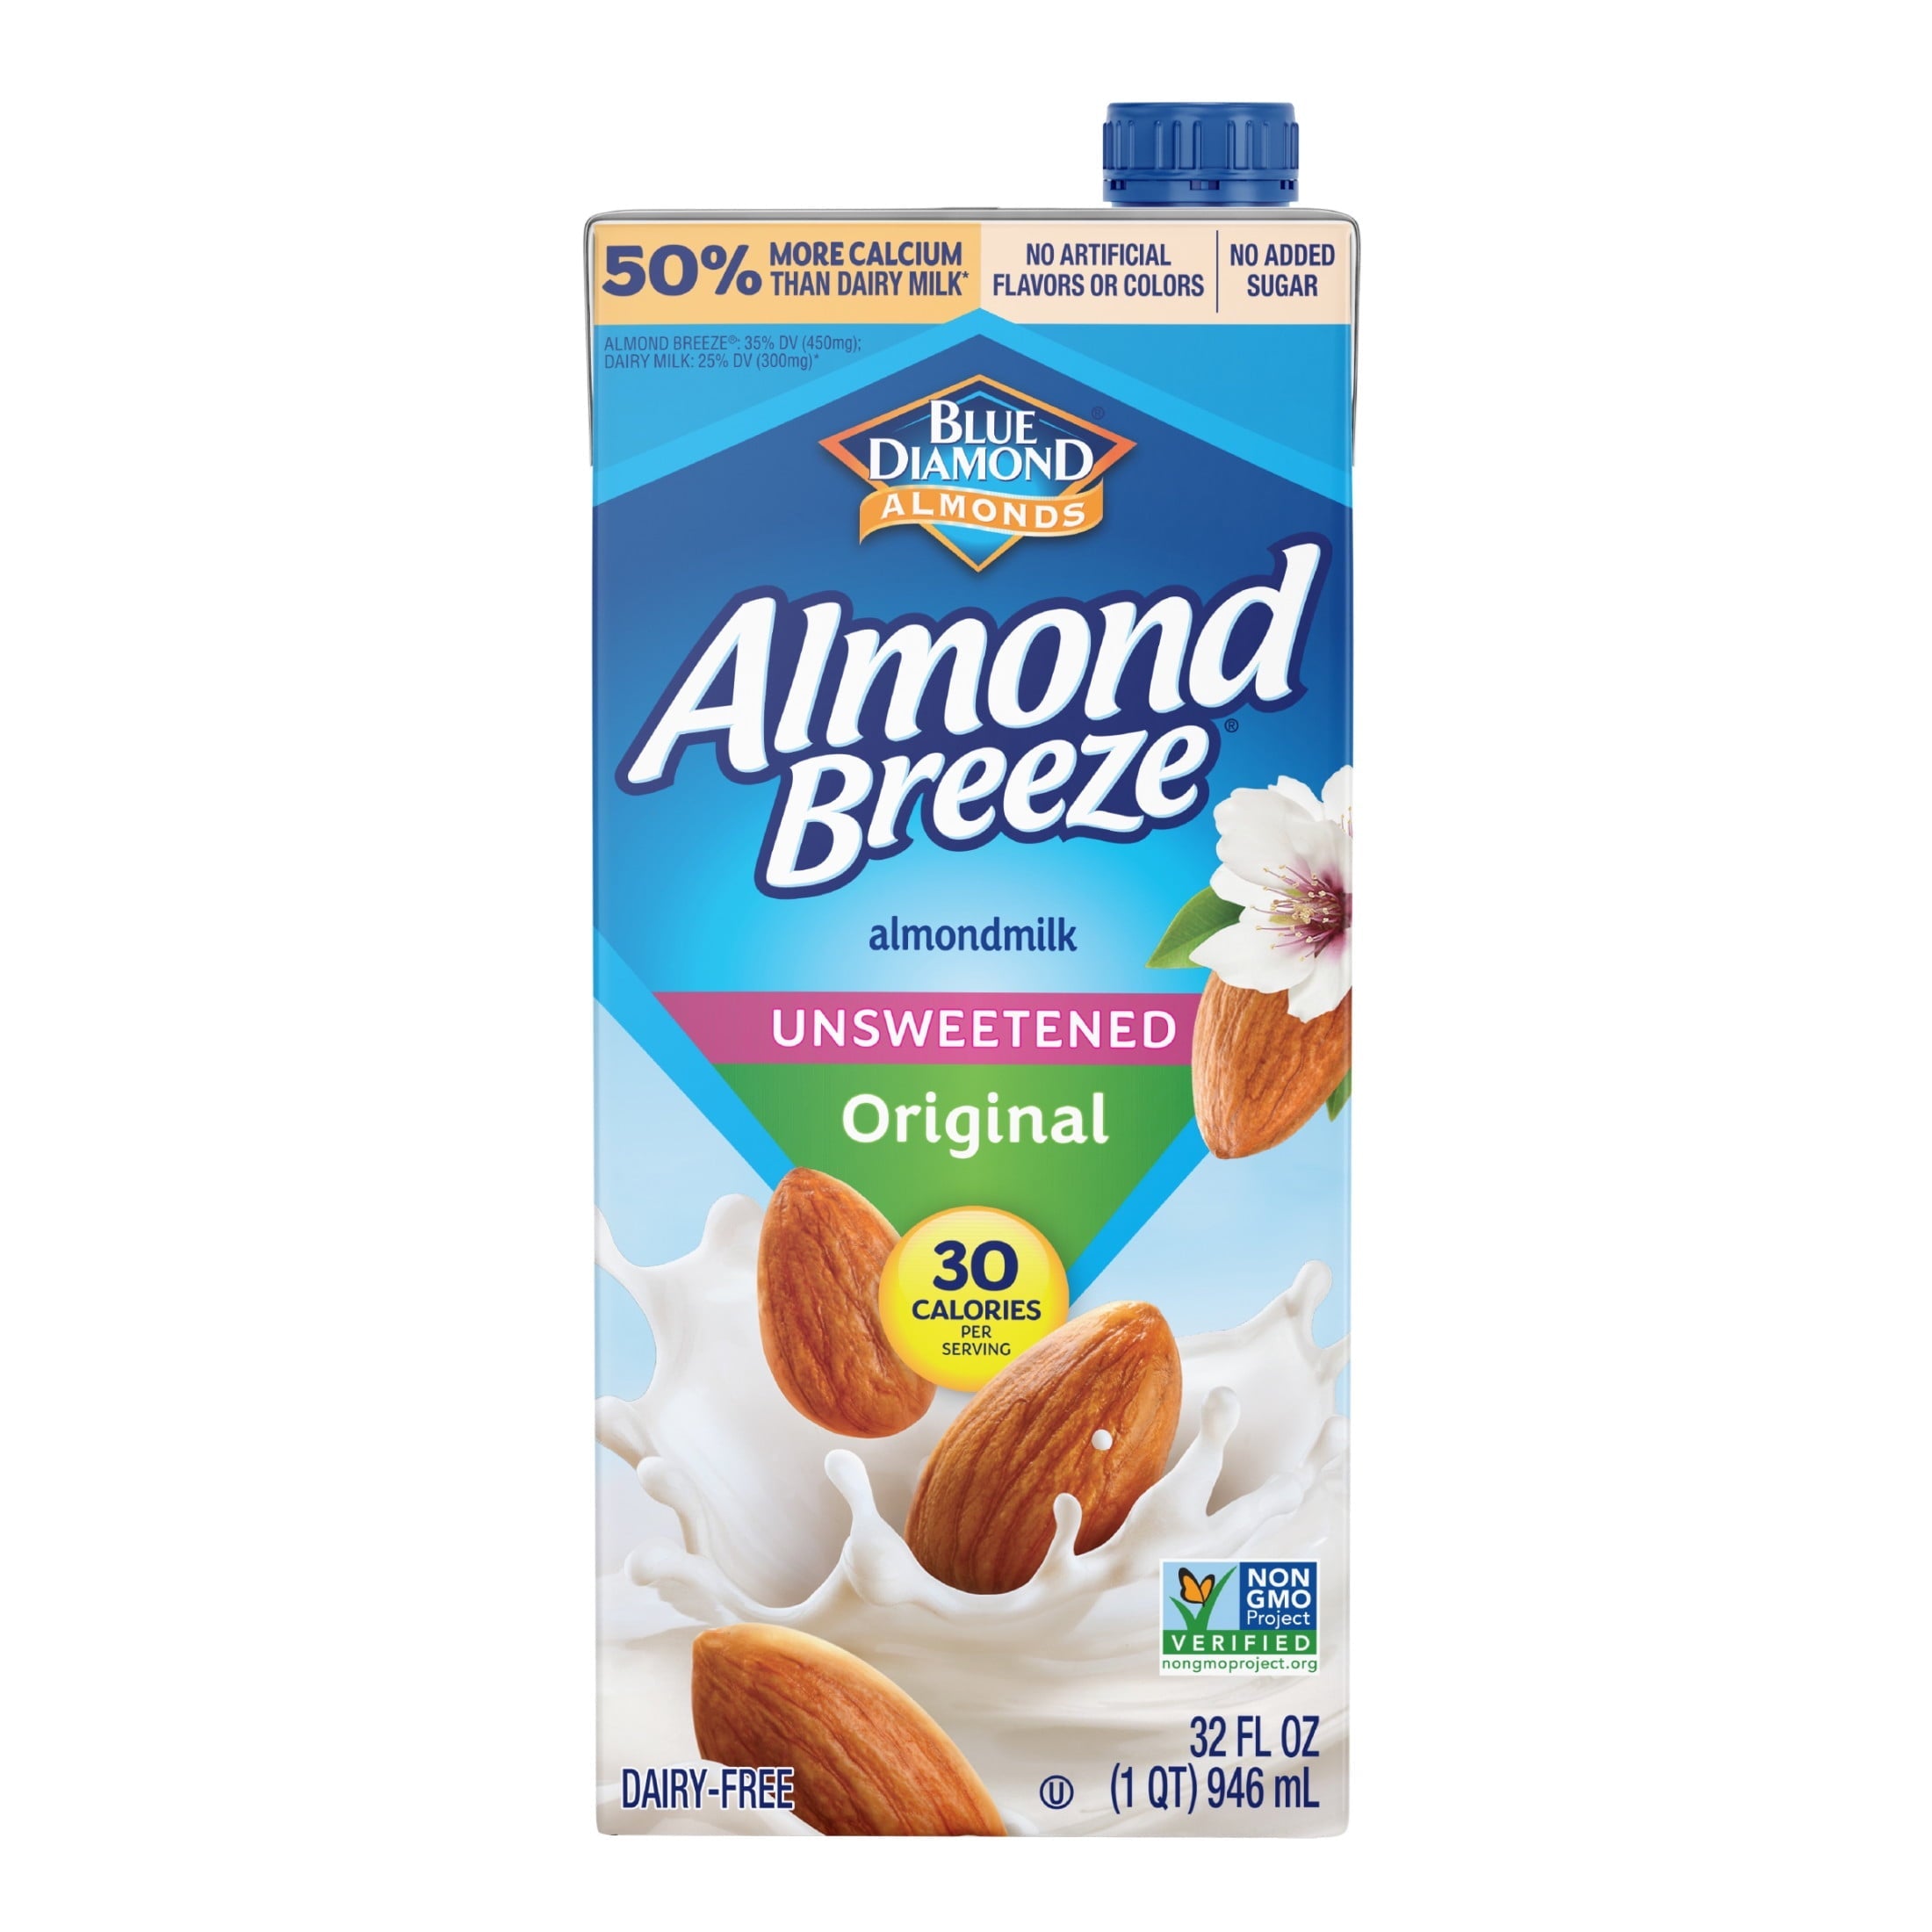 Blue Diamond Almond Breeze Unsweetened Original 32 oz Carton